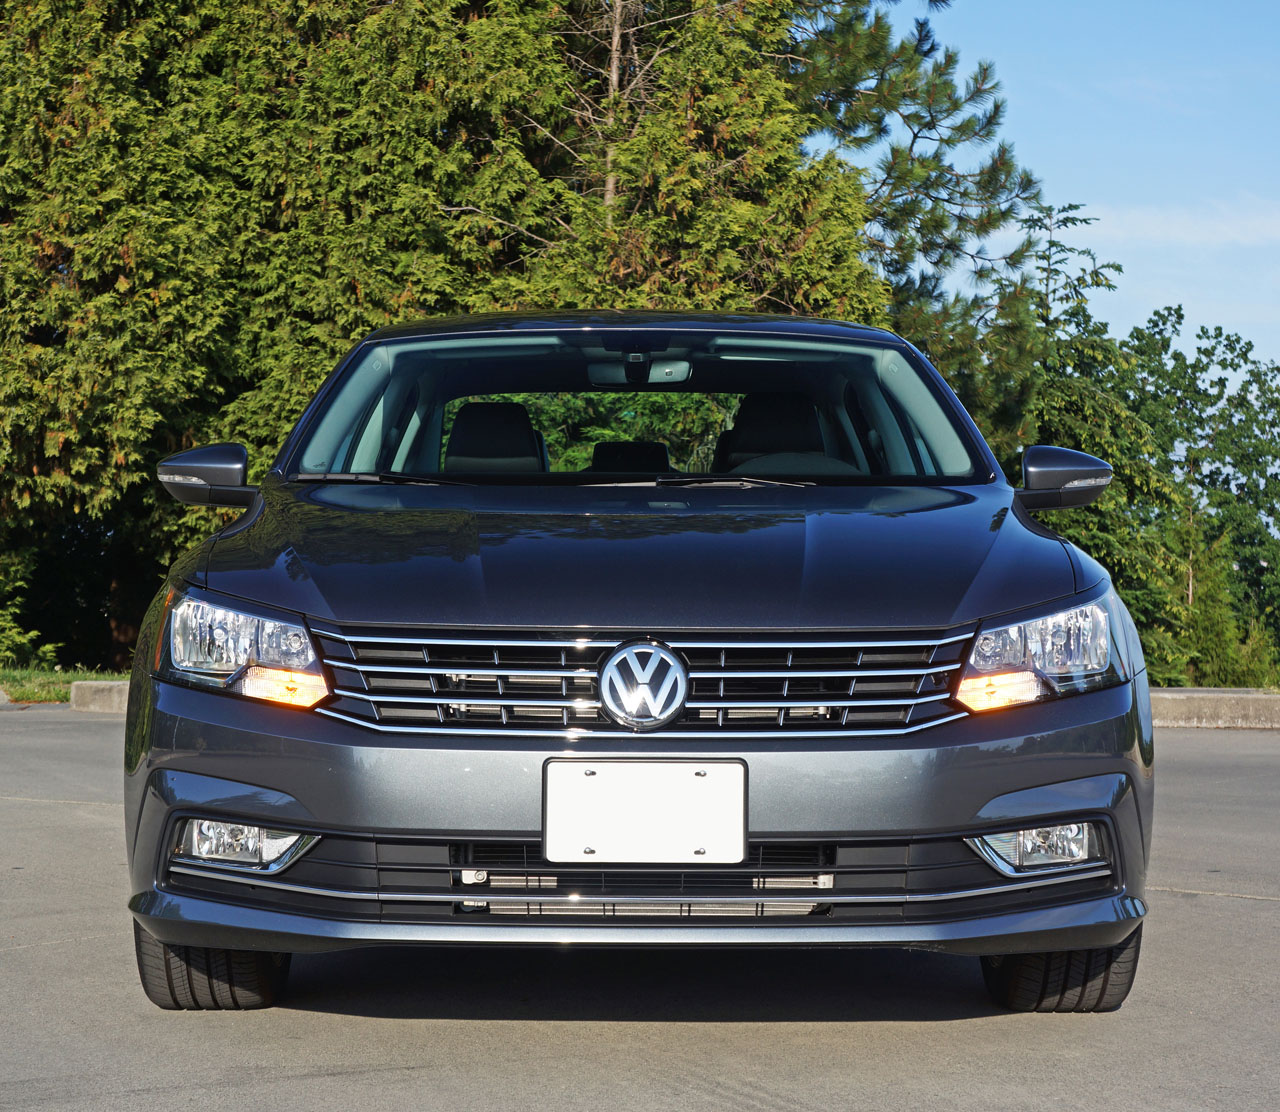 Review: 2016 Volkswagen Passat B8 – 1.8 TSI & 2.0 TSI Driven In